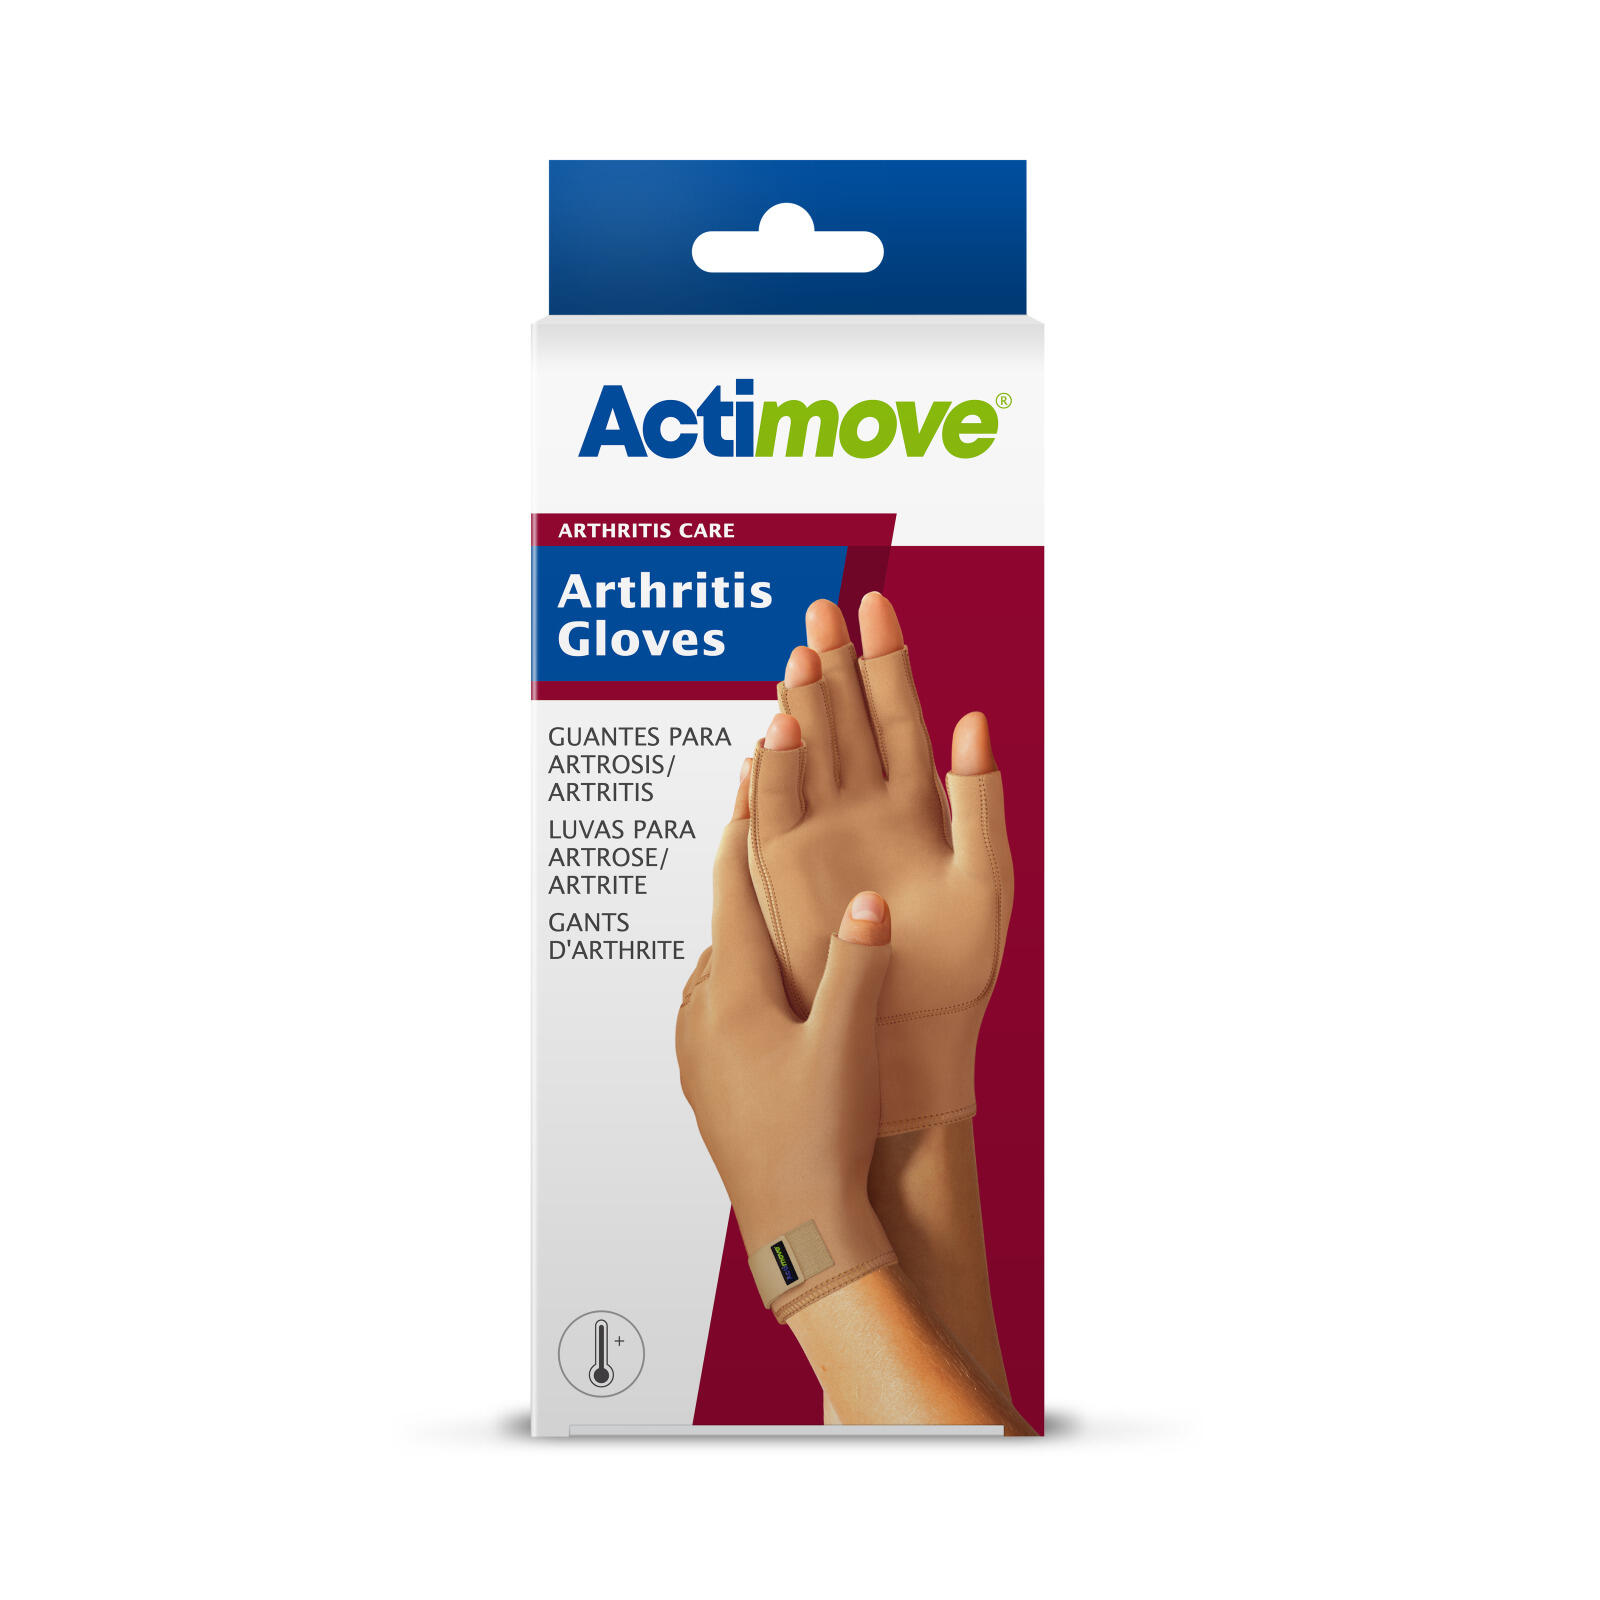 ACTIMOVE Actimove ARTHRITIS CARE Arthritis Gloves - Beige